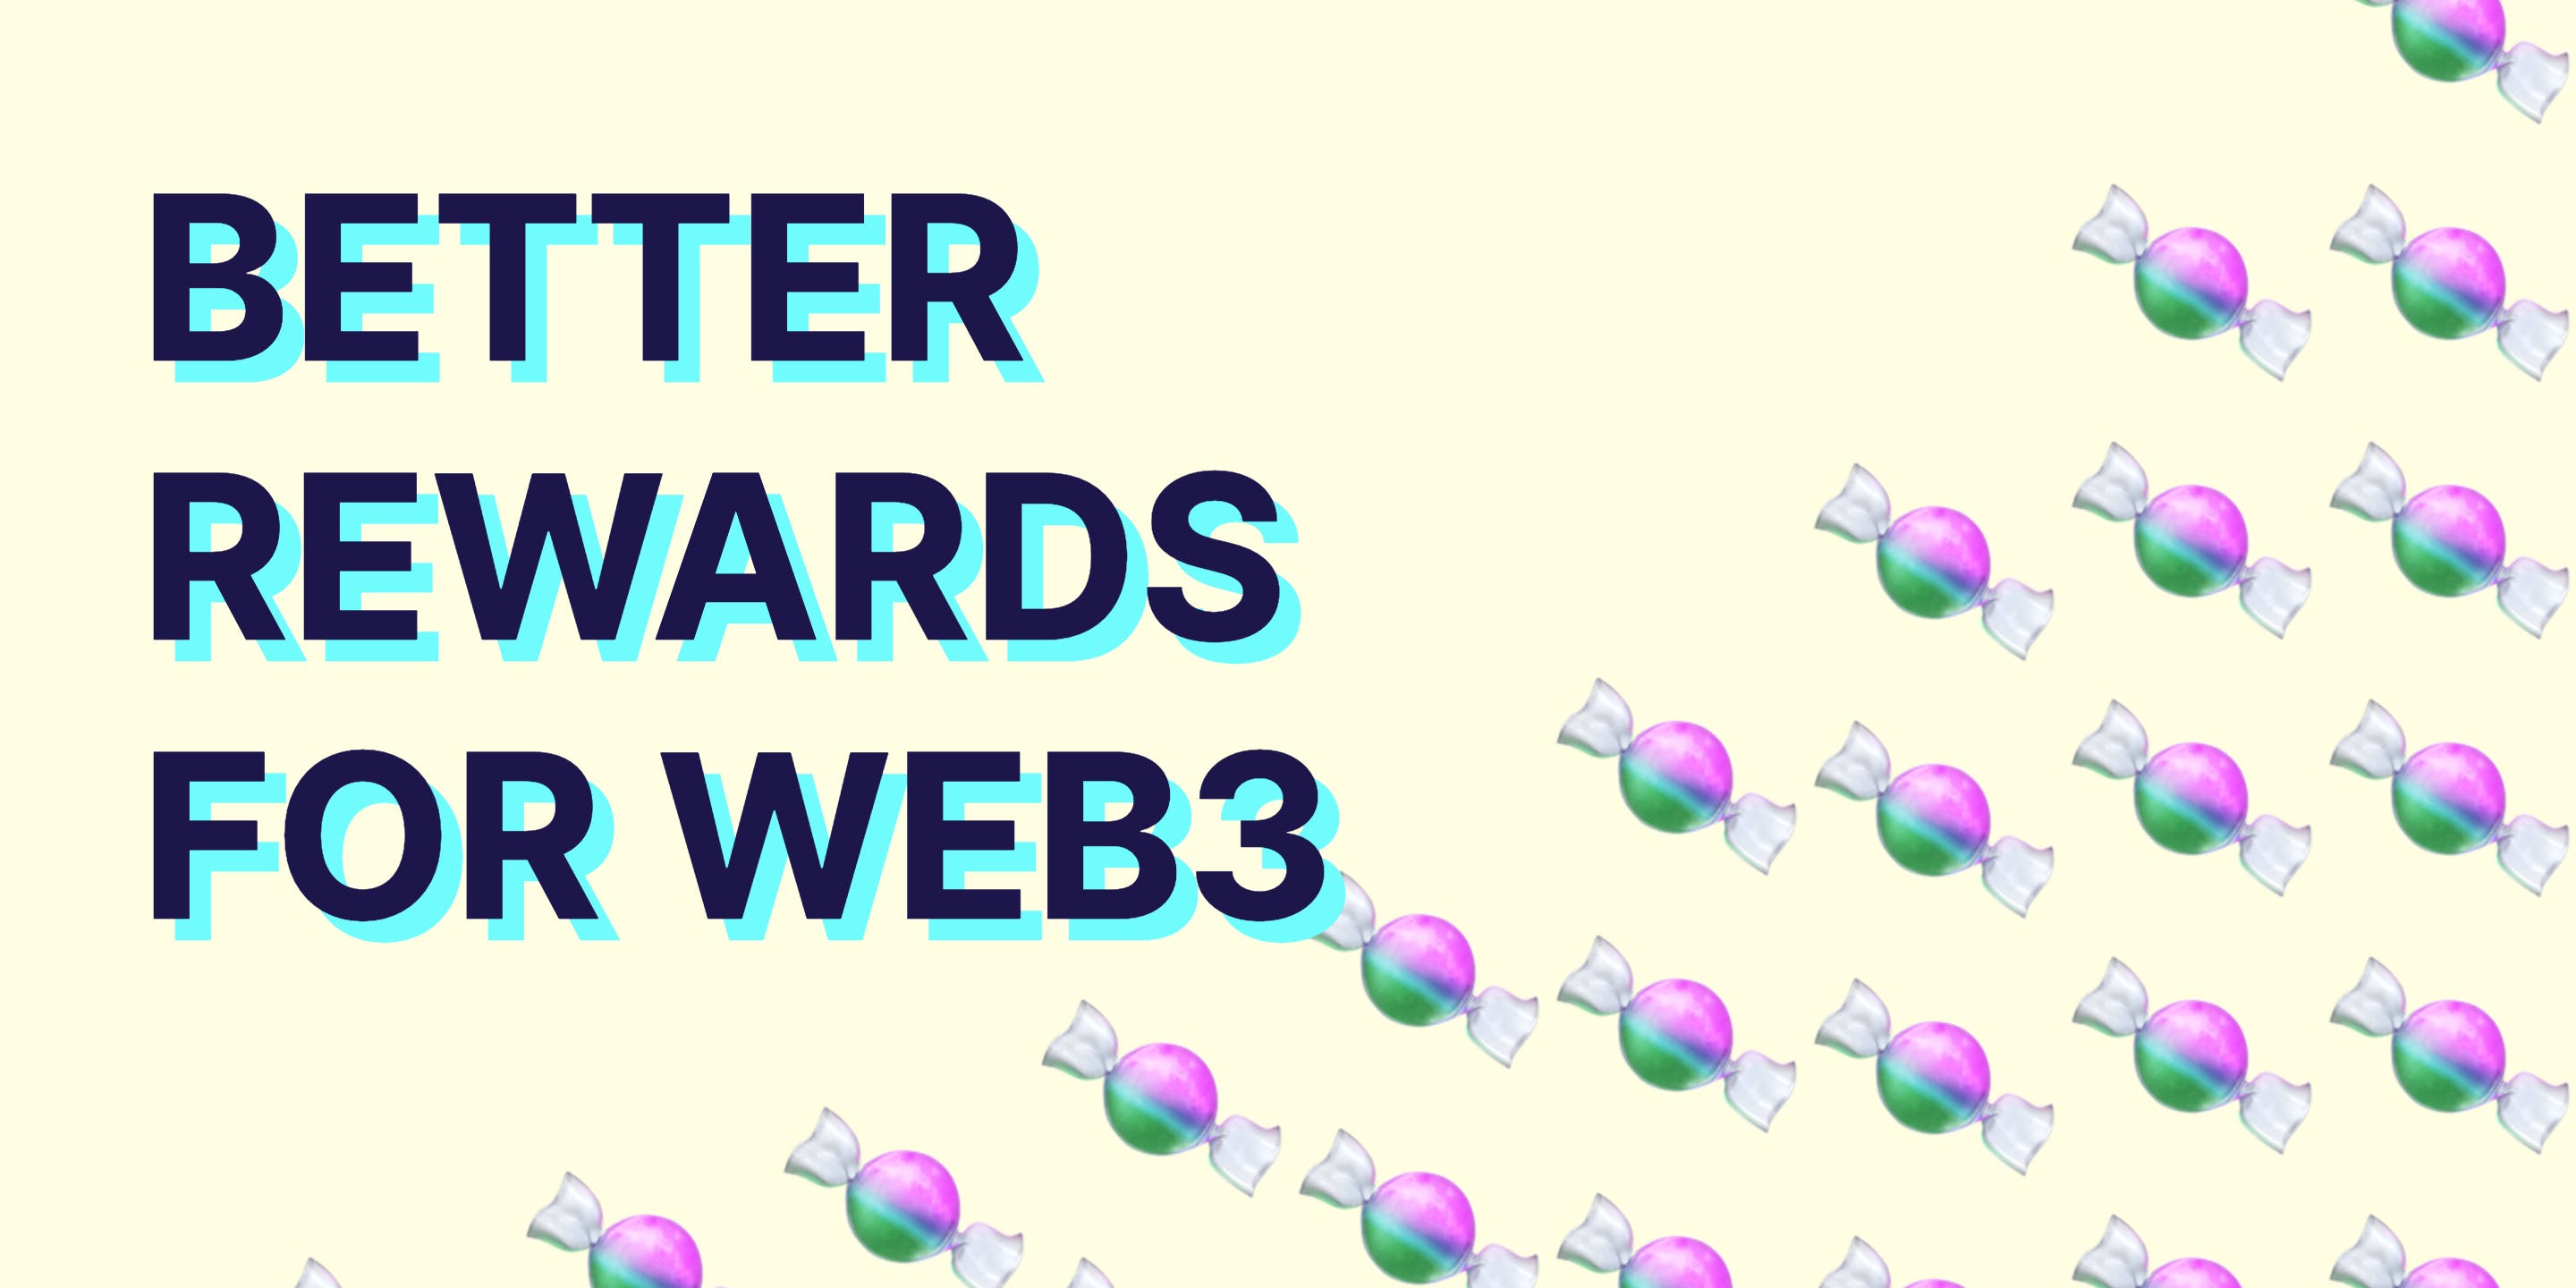 Web3 deserves better rewards